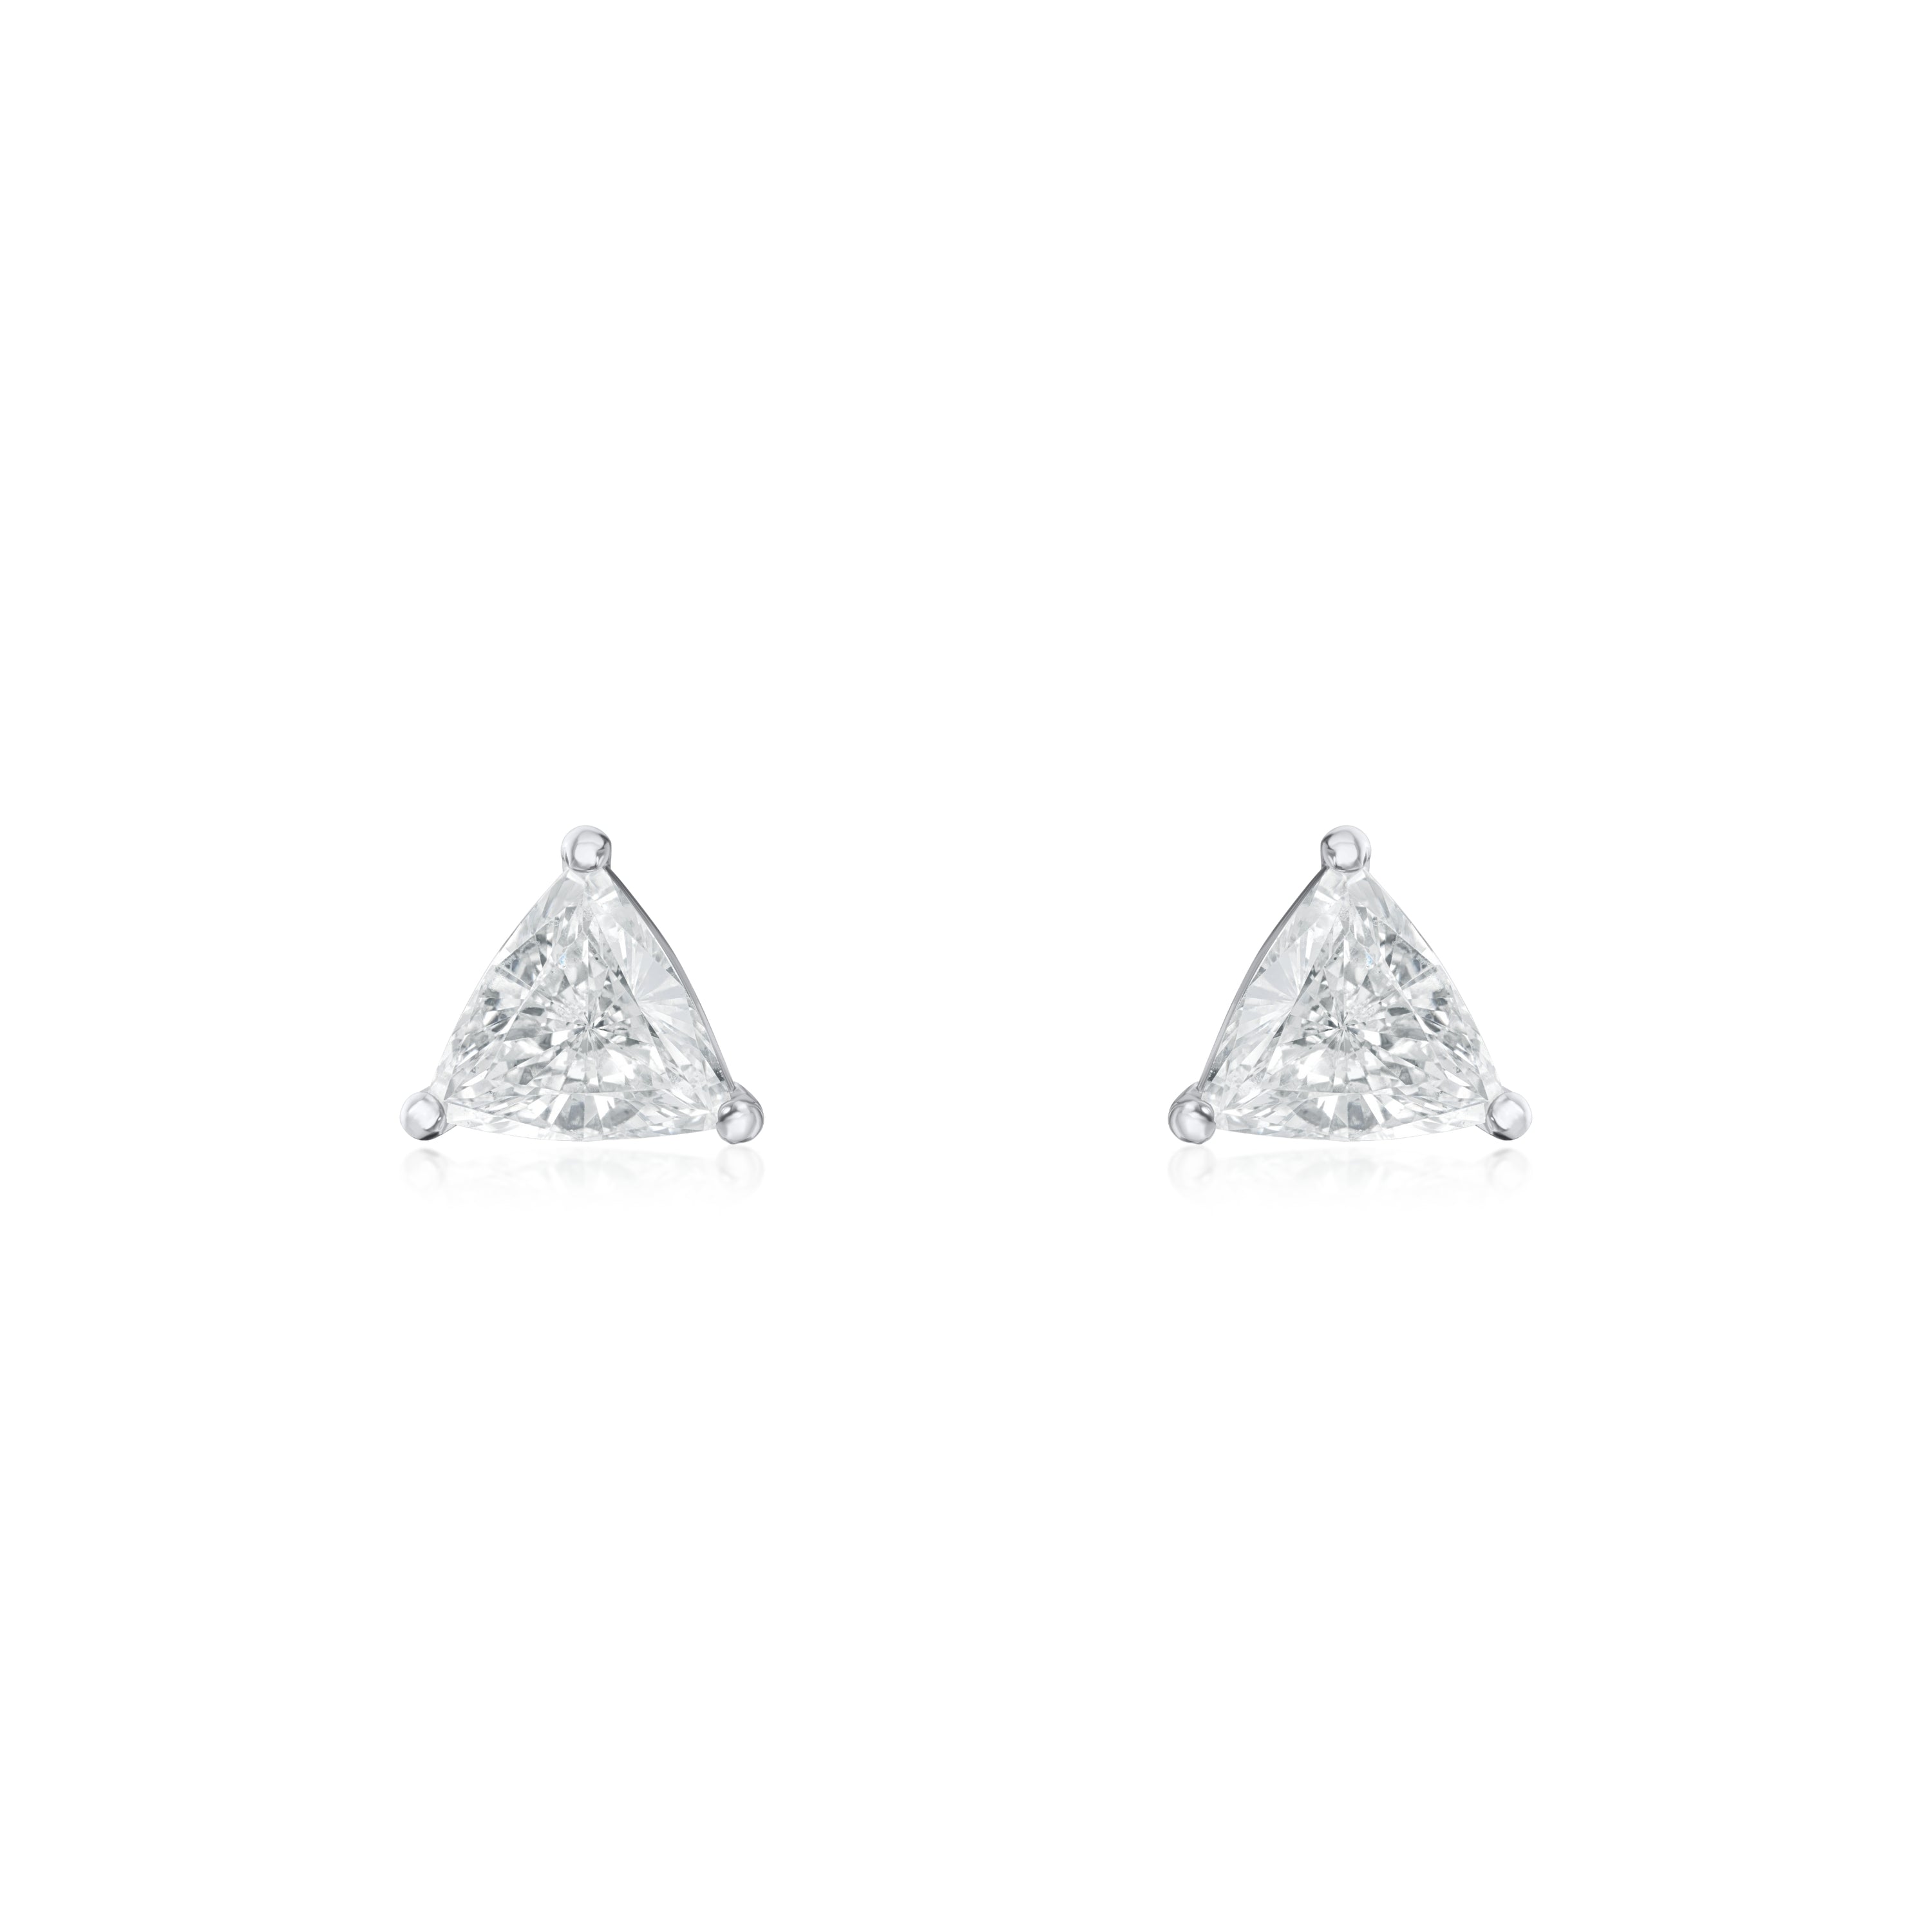 1.58cts Trilliant-Cut Diamond Stud Earrings